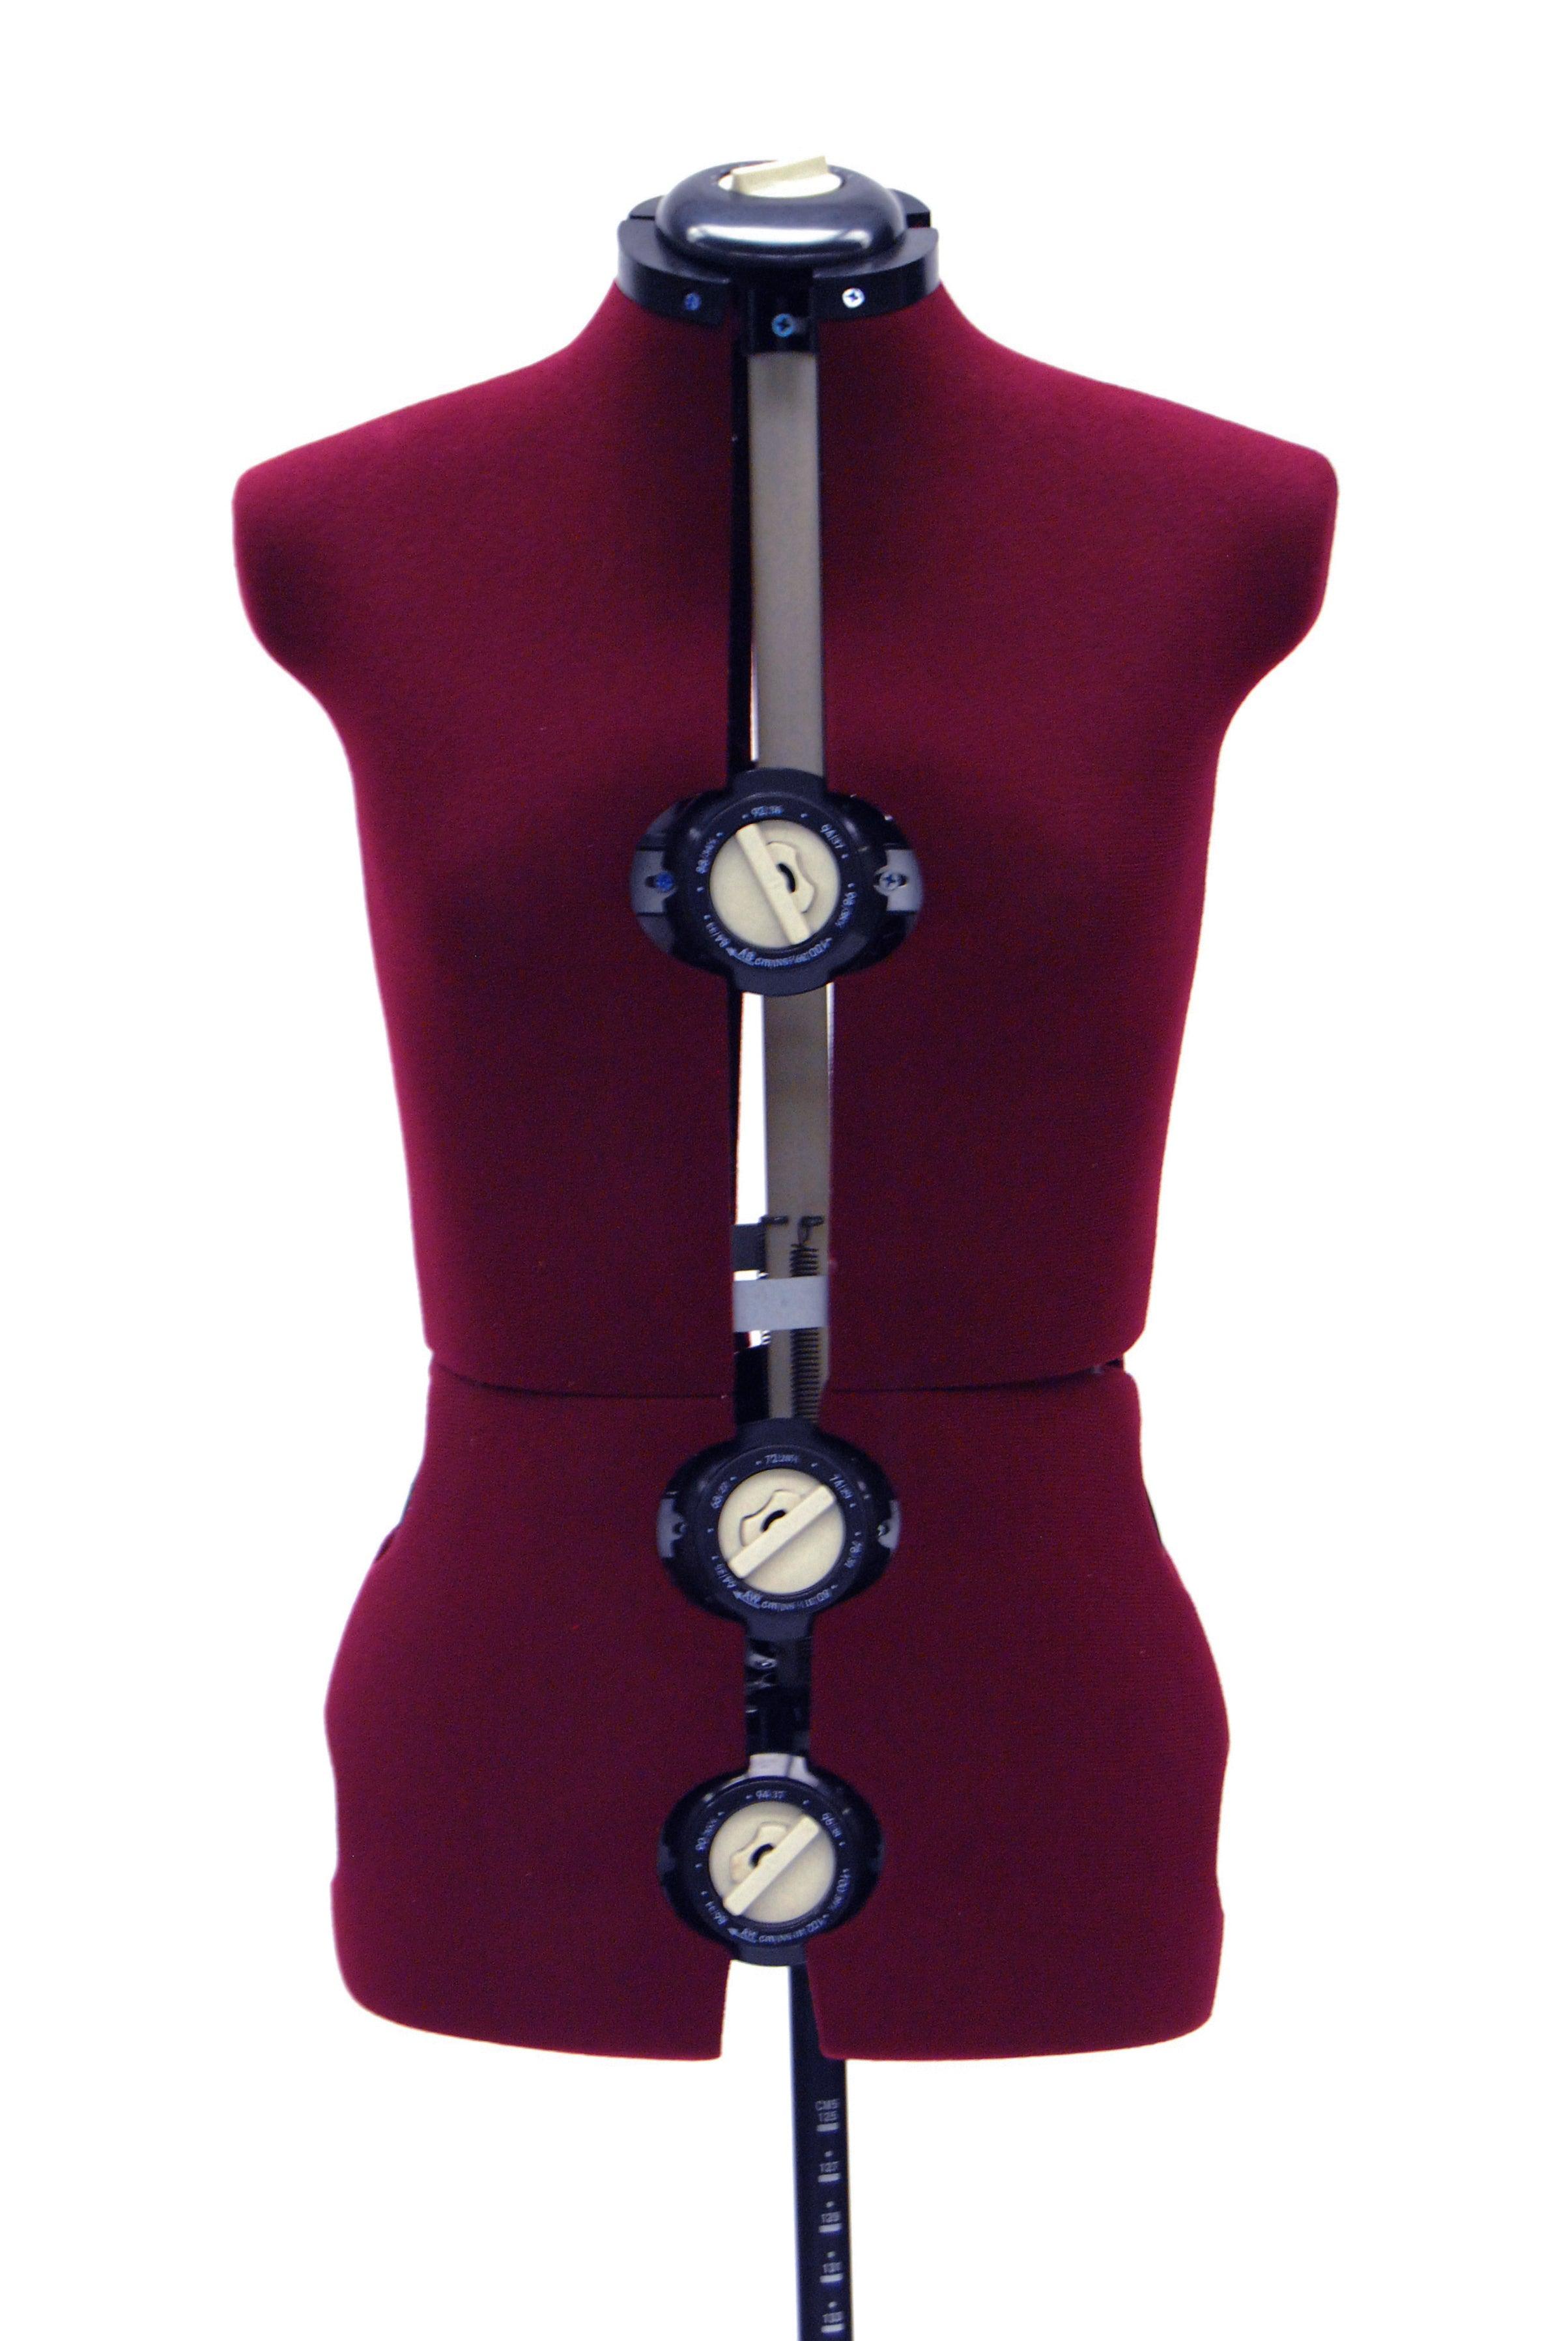 Adjustable dress forms manufactured by singer direct®.